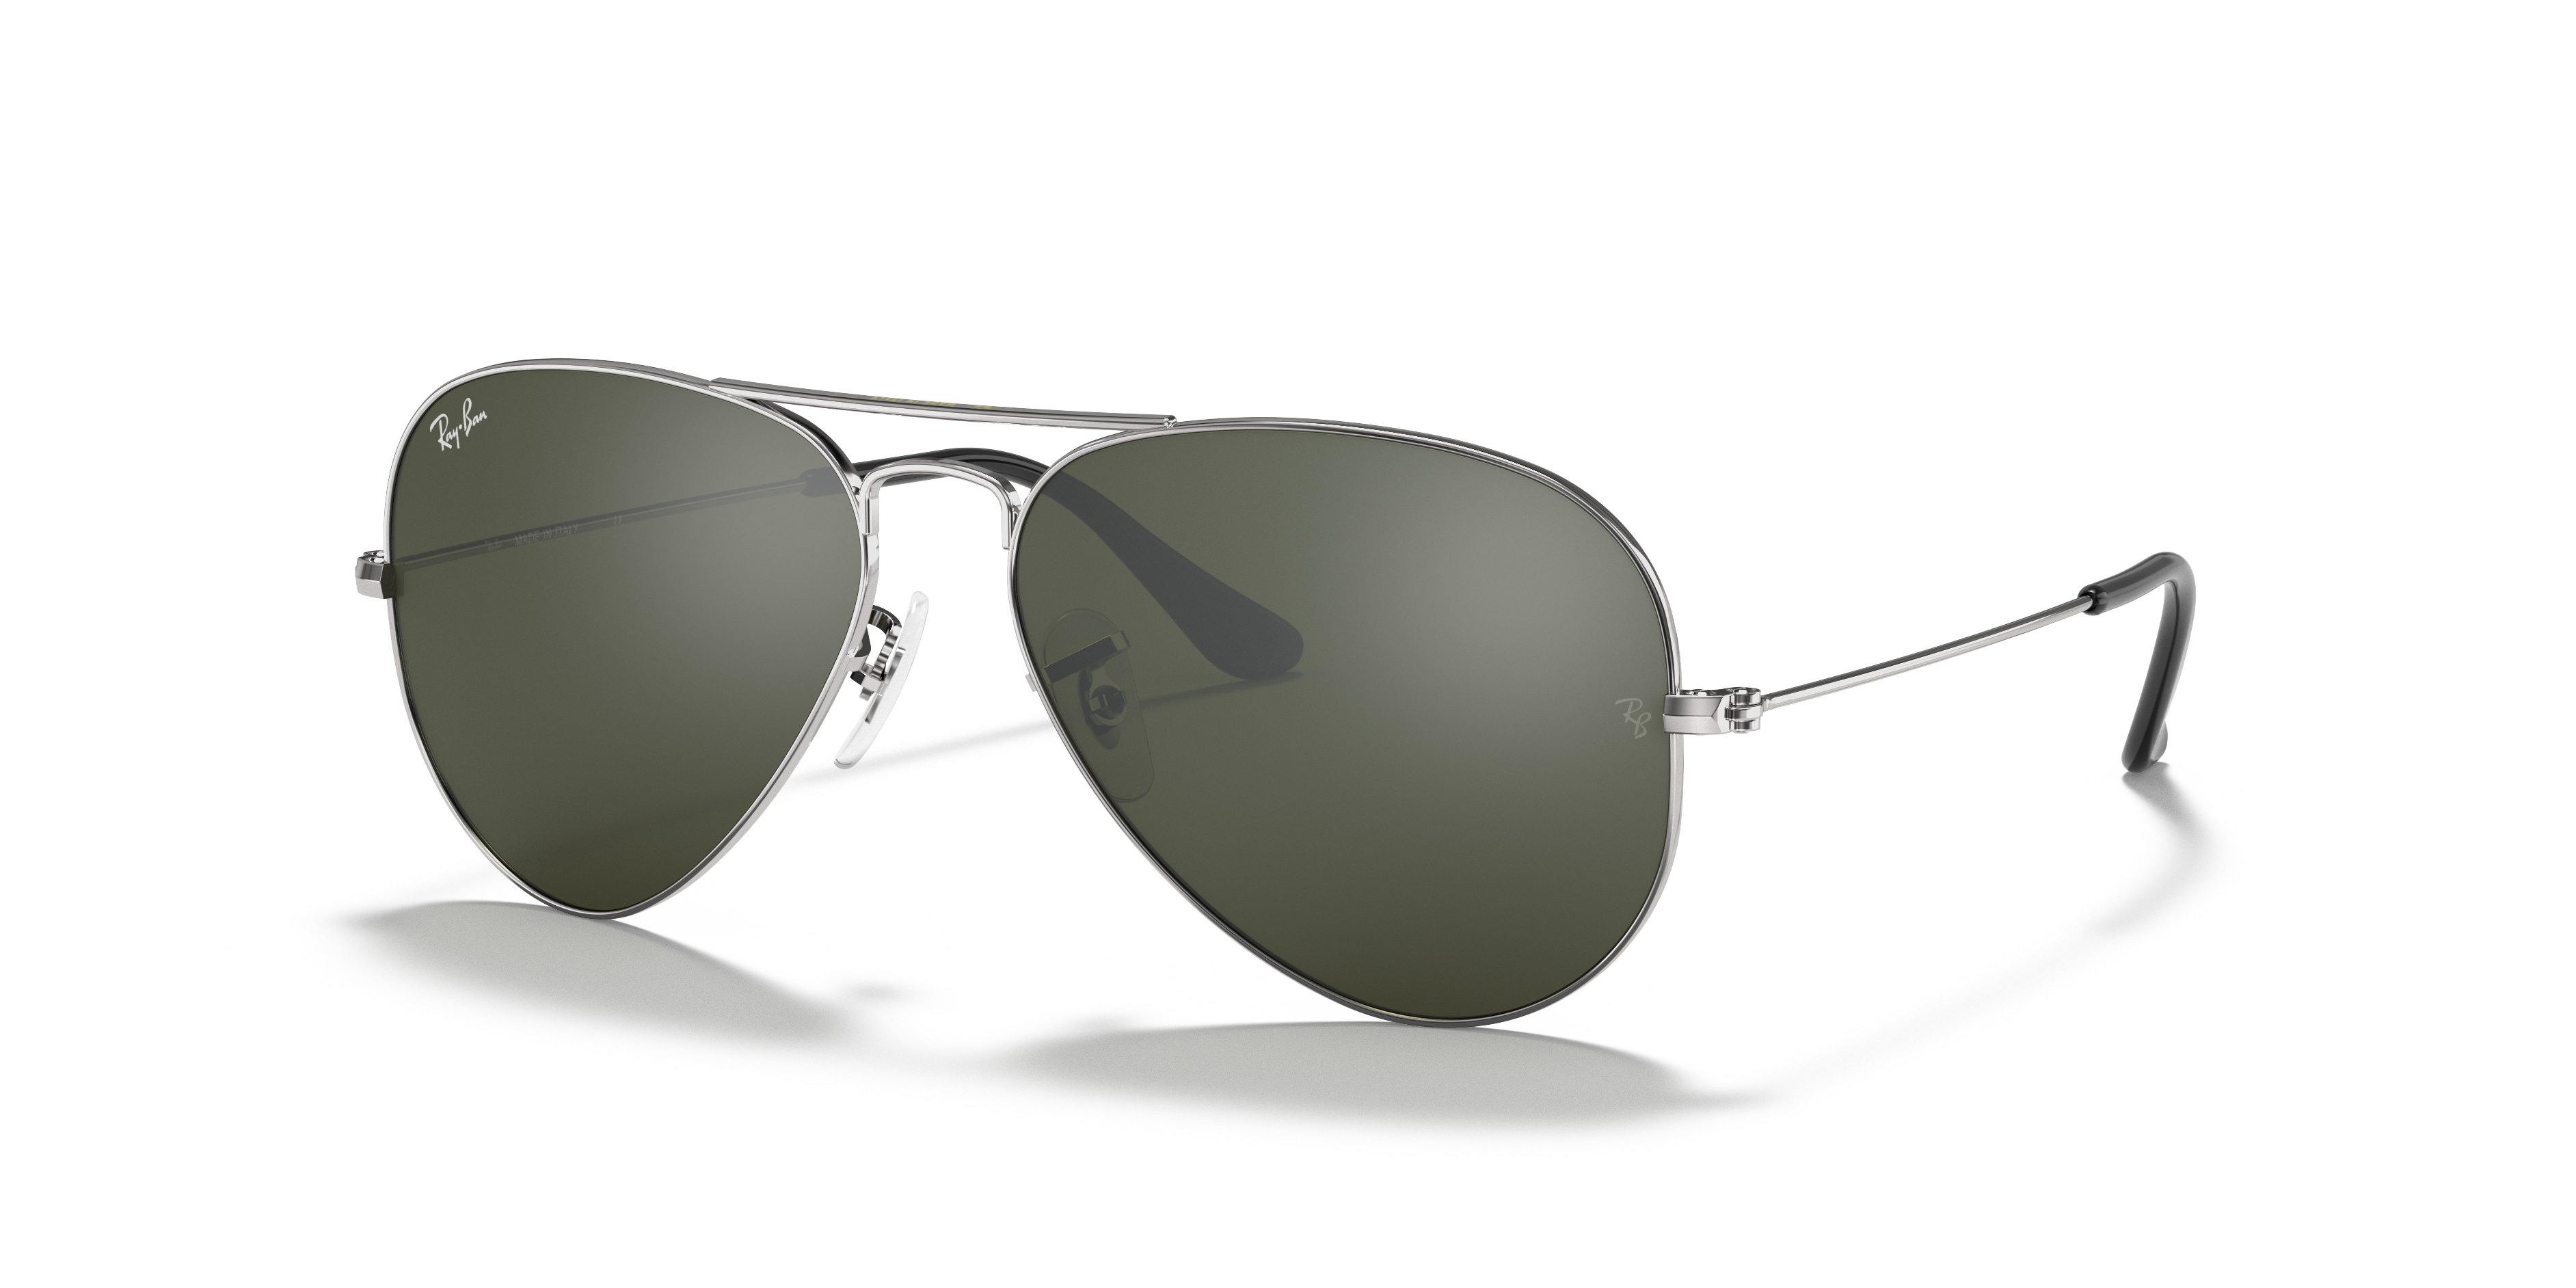 Ray-Ban Zonnebril Pilot RB3025 Unisex Zilver kleur Frame &Zilver Spiegel Lens Accessoires Zonnebrillen & Eyewear Zonnebrillen 